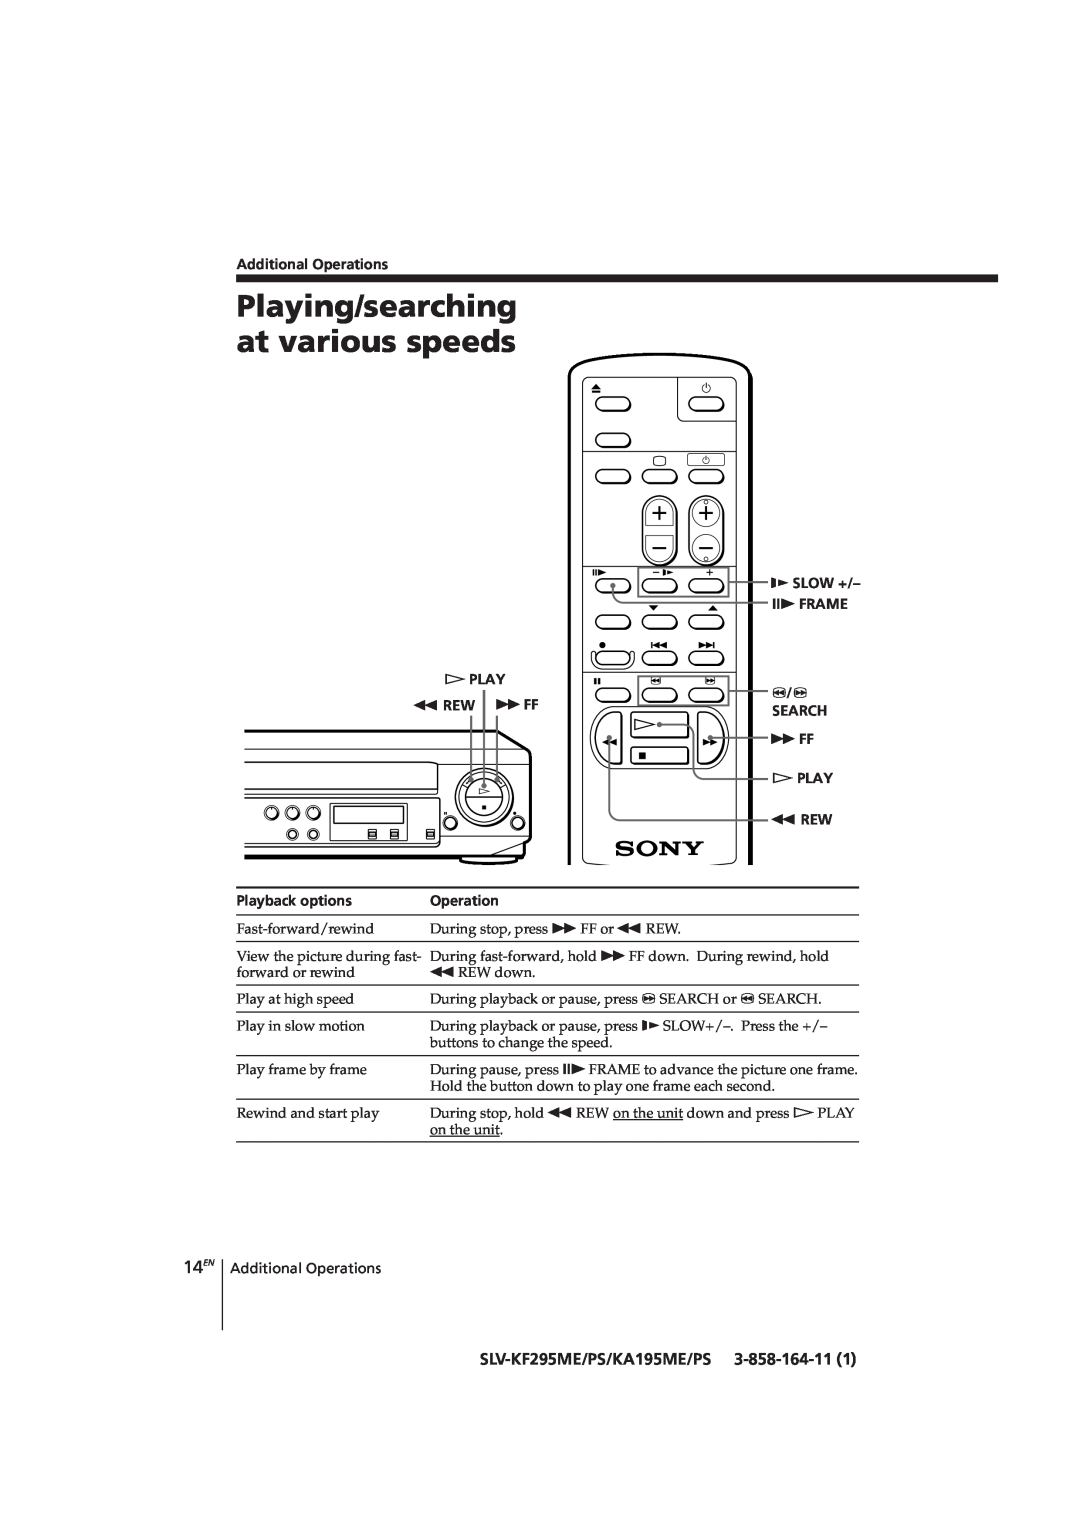 Sony SLV-KF295CH, SLV-KA195CH manual Playing/searching at various speeds, 14EN, SLV-KF295ME/PS/KA195ME/PS 